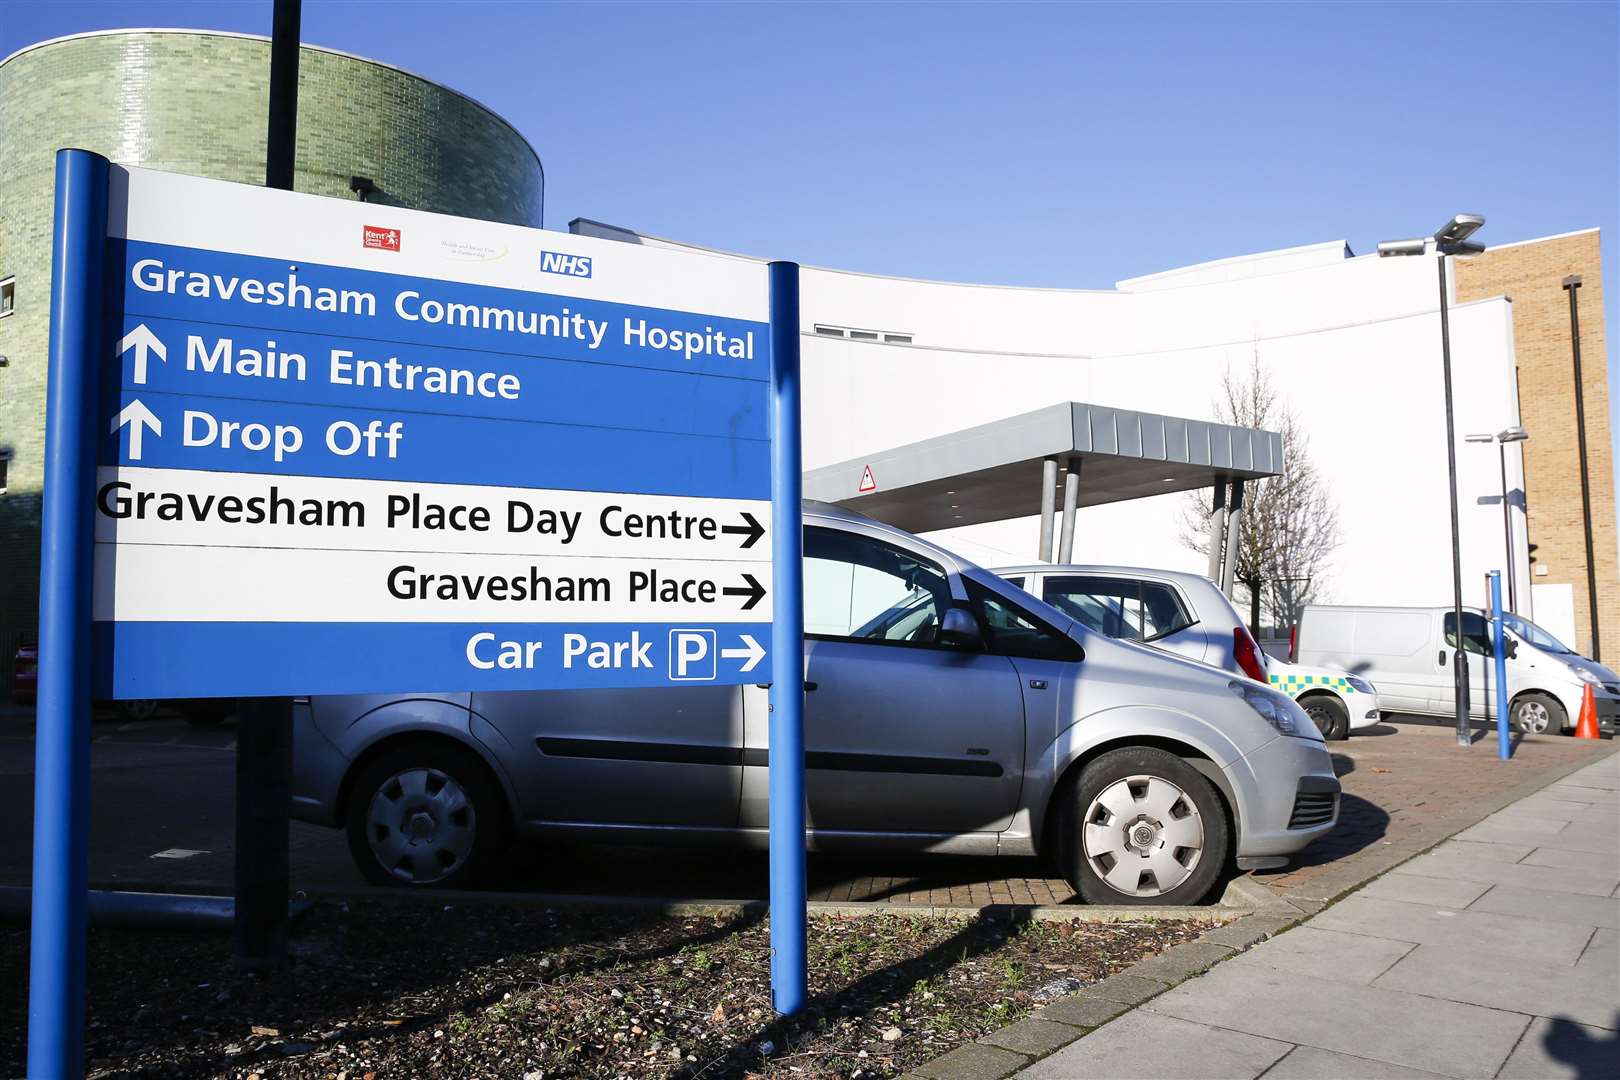 The Gravesham Community Hospital, in Bath Street, Gravesend, is also under consideration